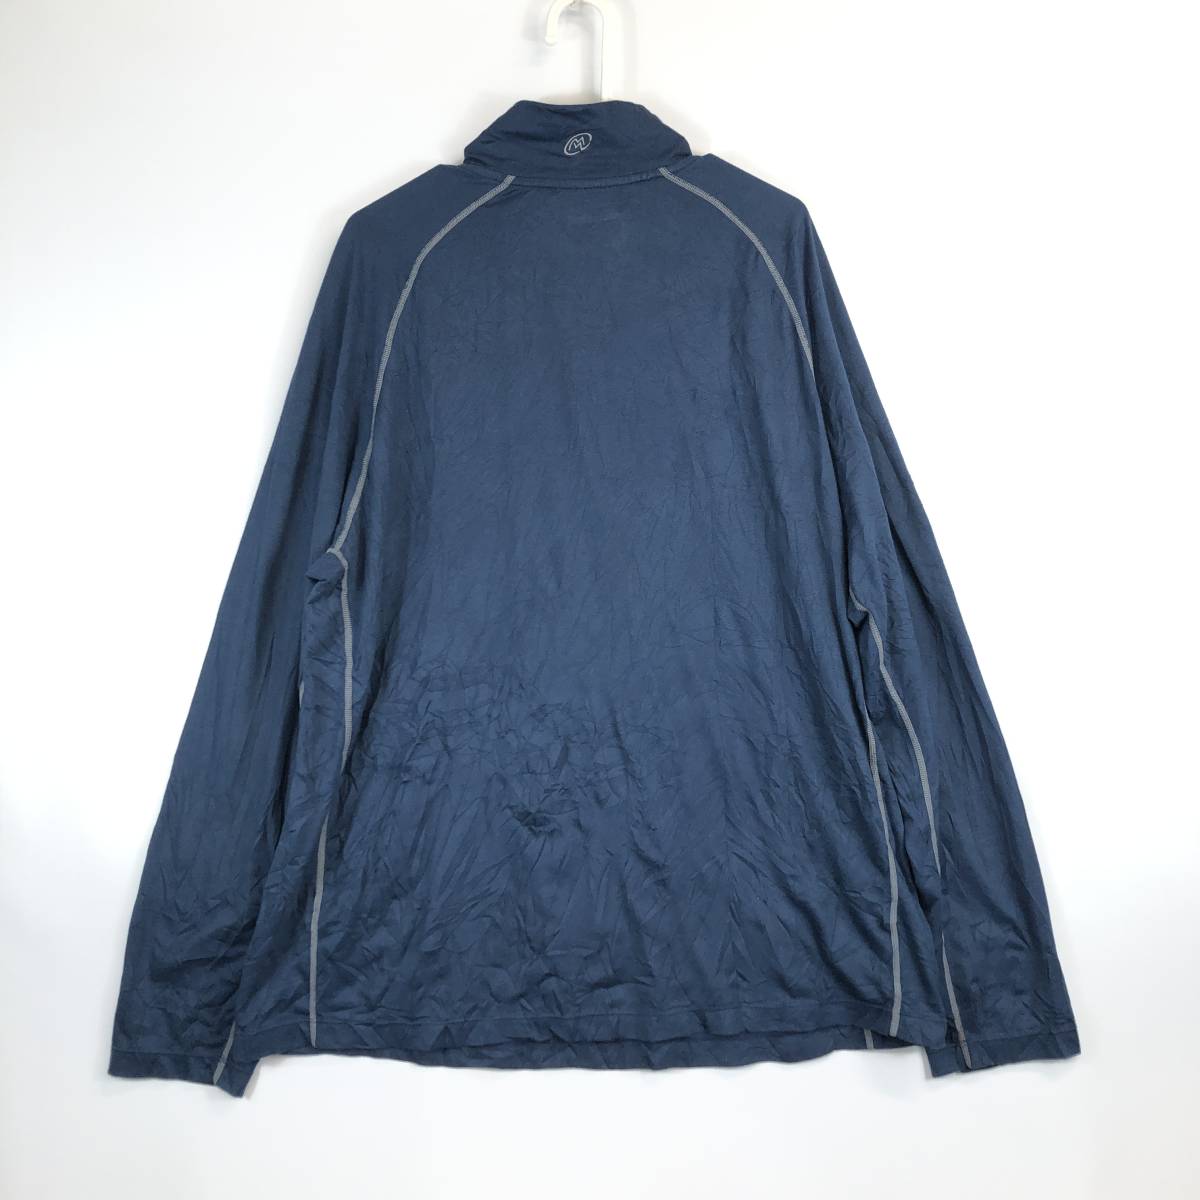  Cloudveil Cloudveil long sleeve pull over shirt cotton poly- cloth XXL size 